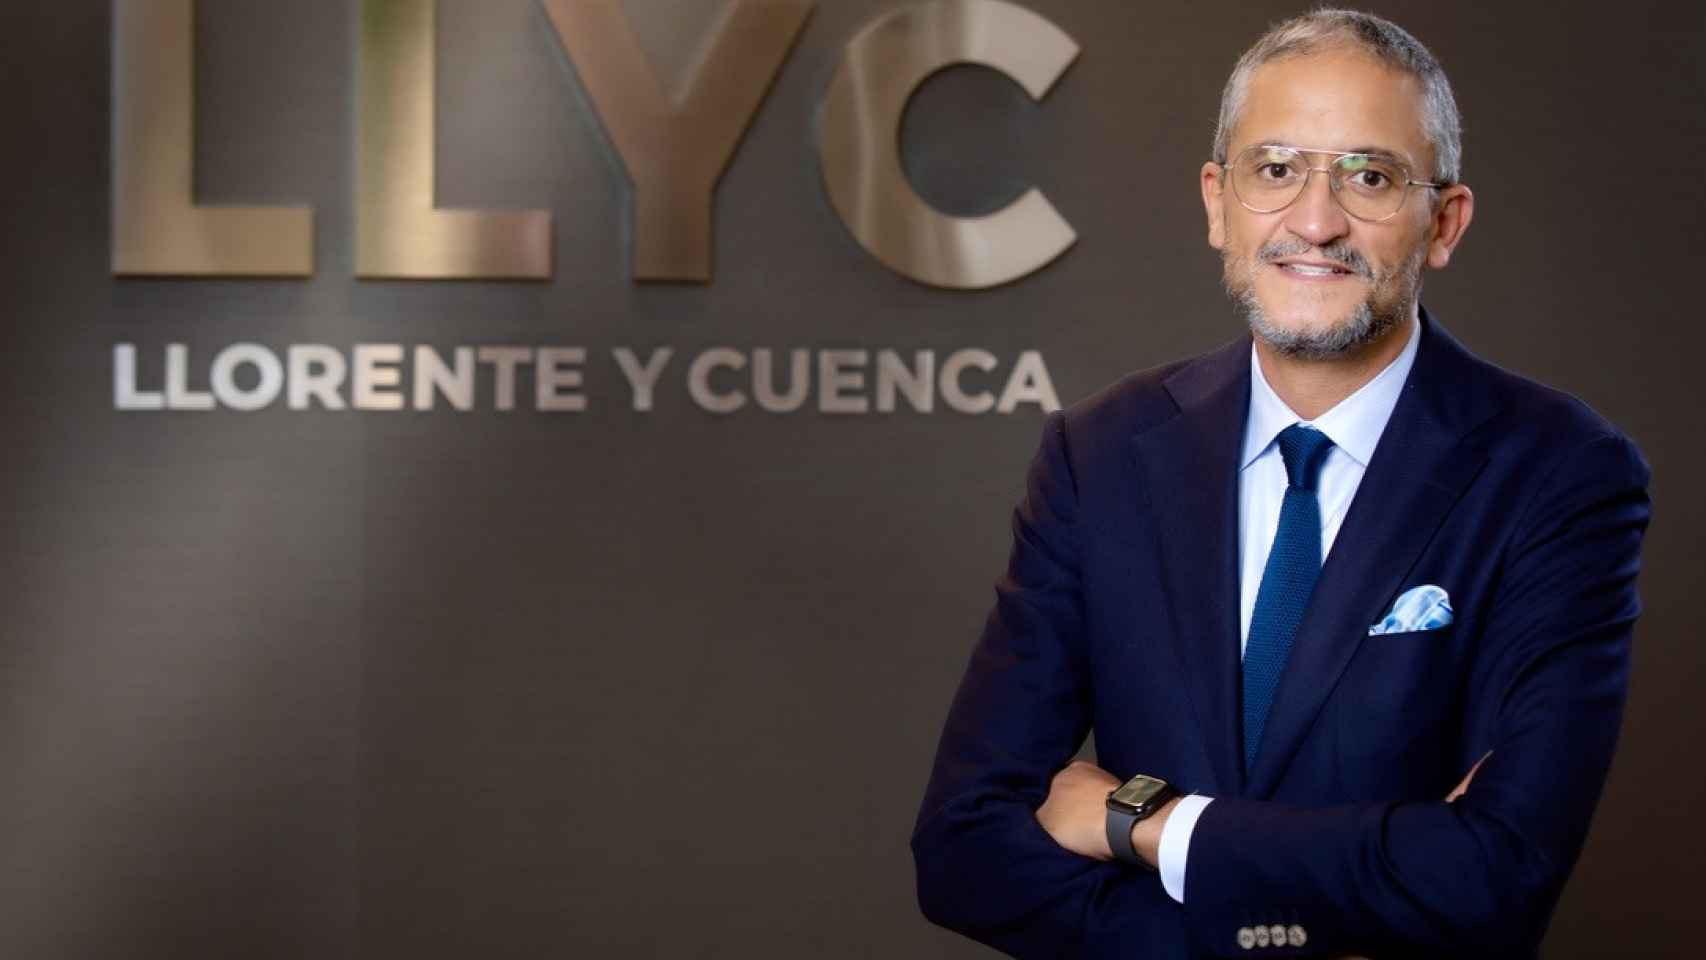 Alejandro Romero, CEO Global de LLYC.